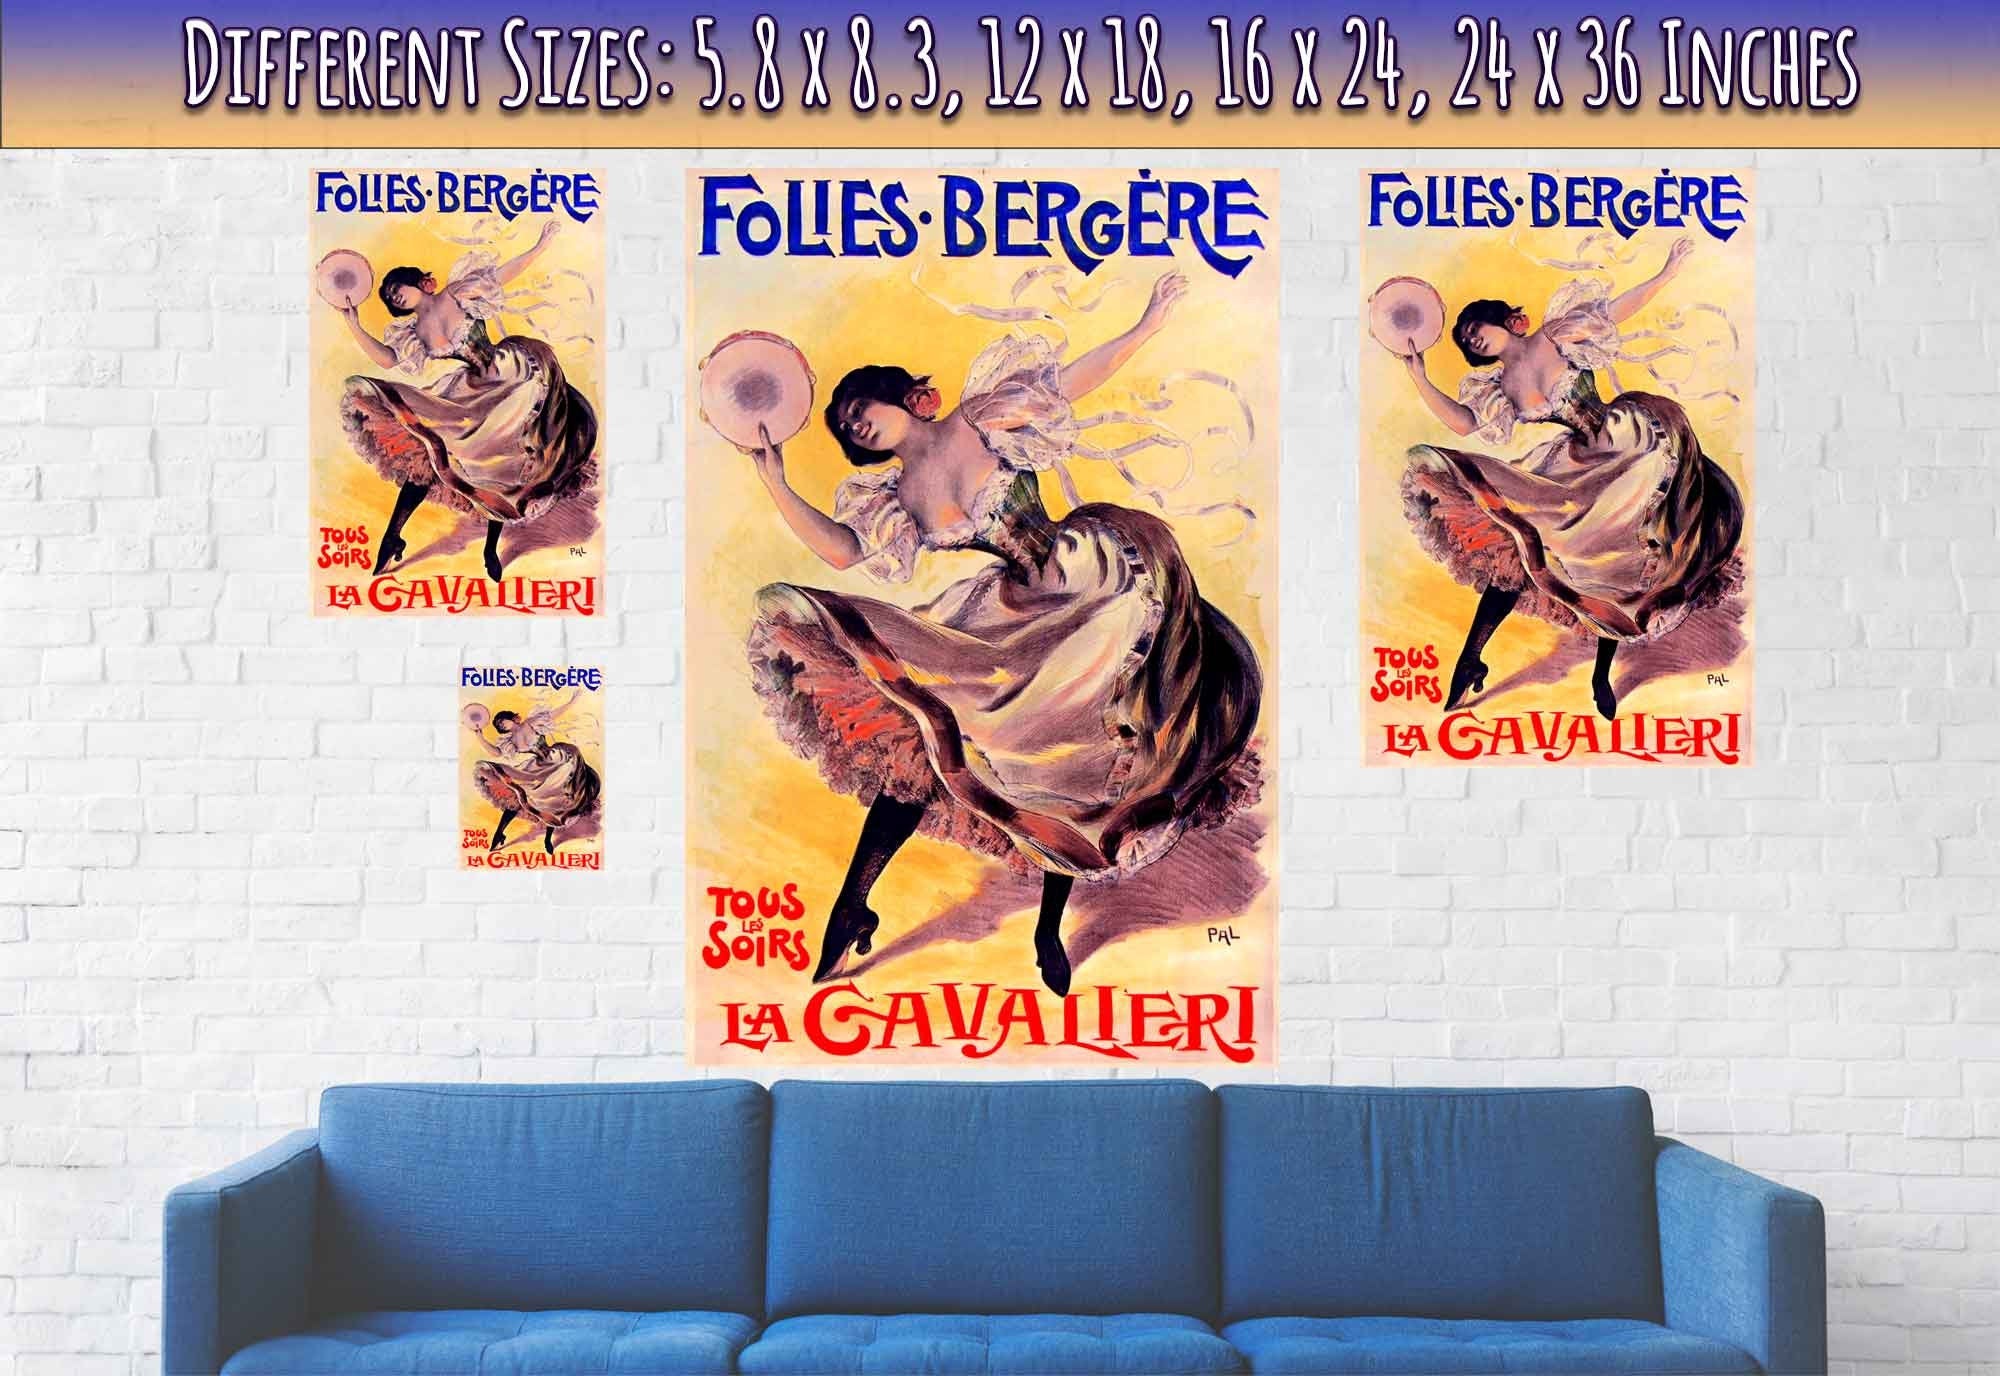 Folies Bergere Poster La Cavalieri 1897 - Folie Bergere Print Jean De Paleologu - WallArtPrints4U